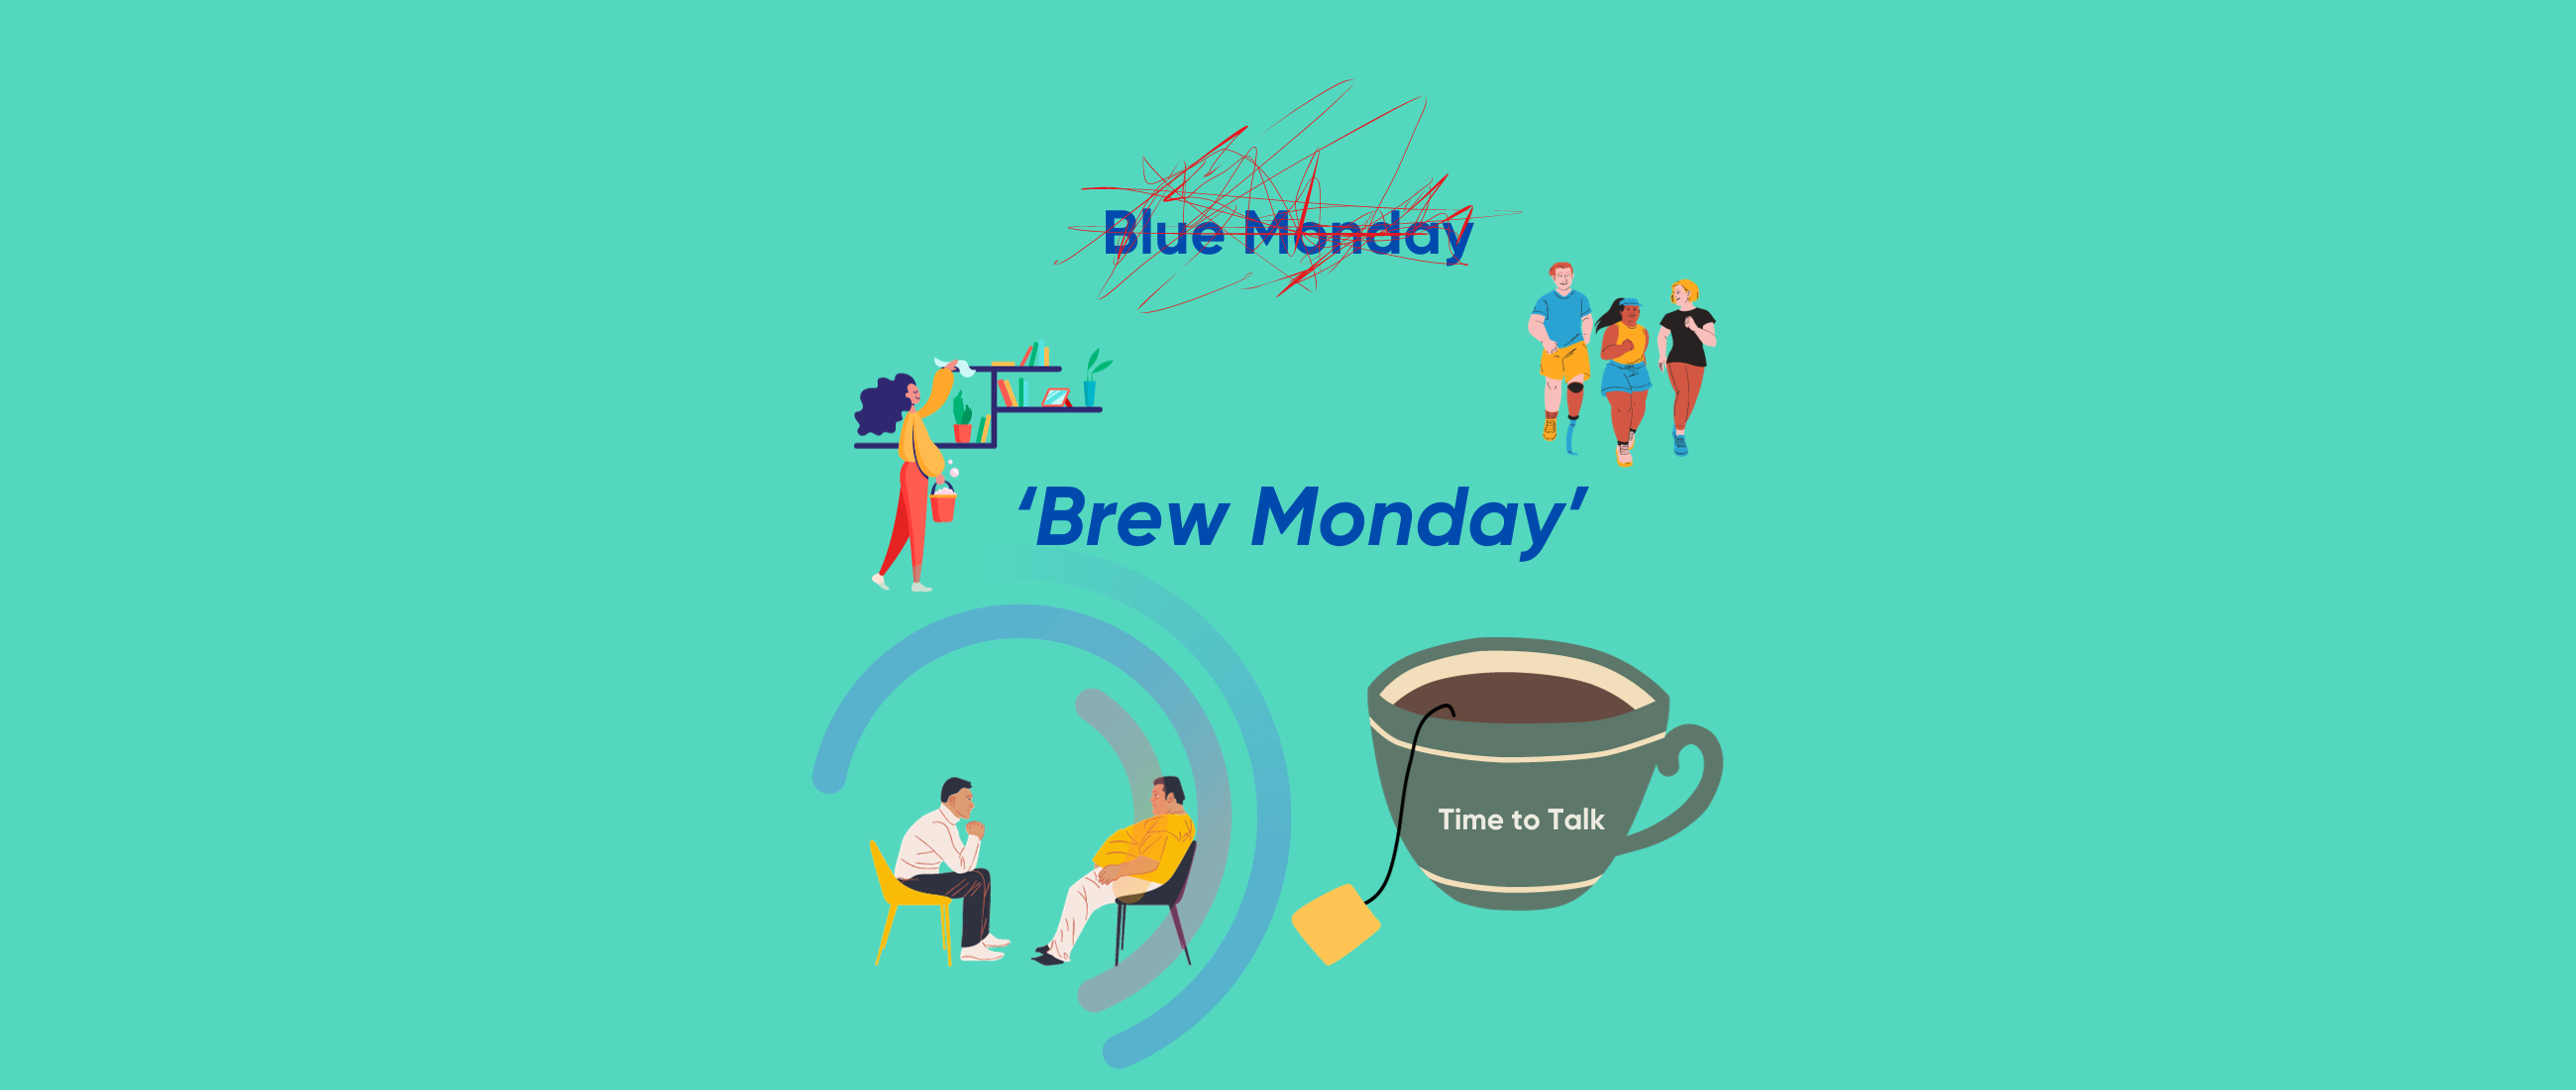 Blue Monday website